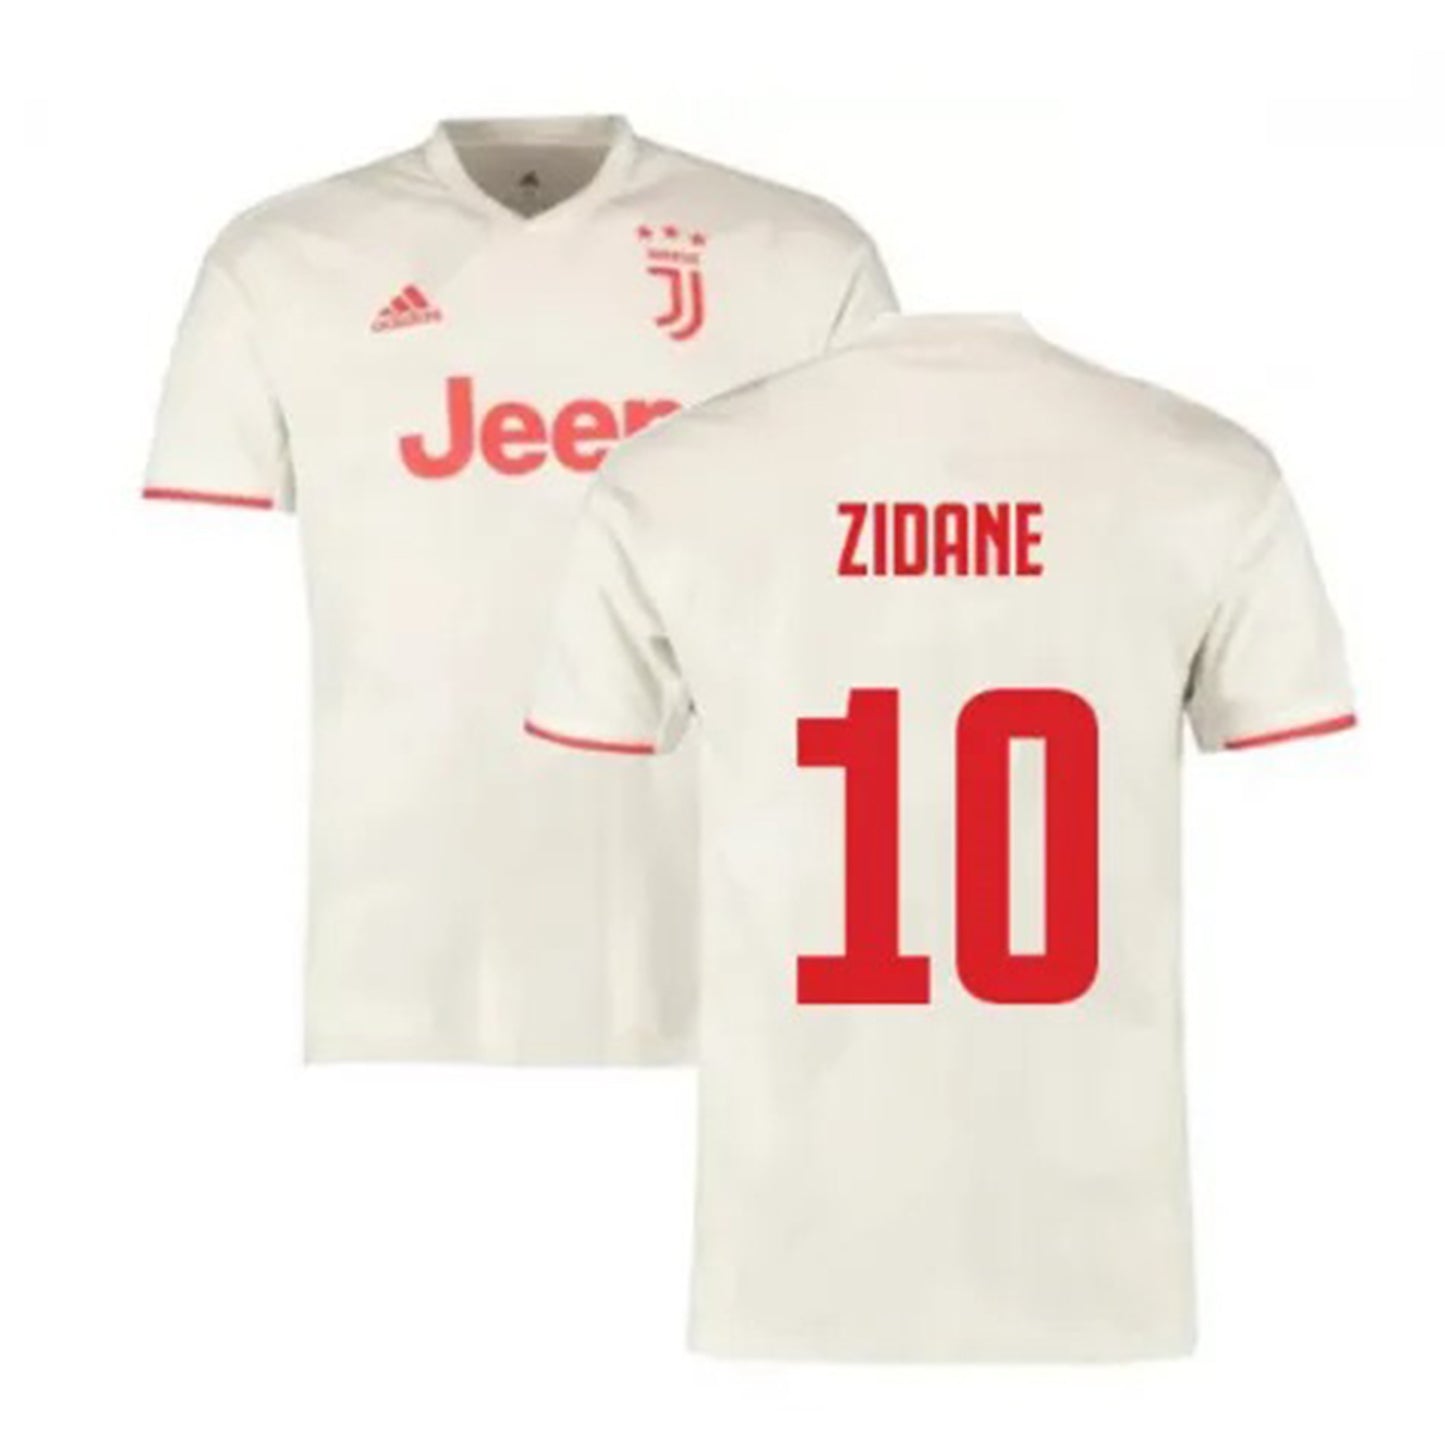 Zinedine Zidane Juventus 10 Jersey